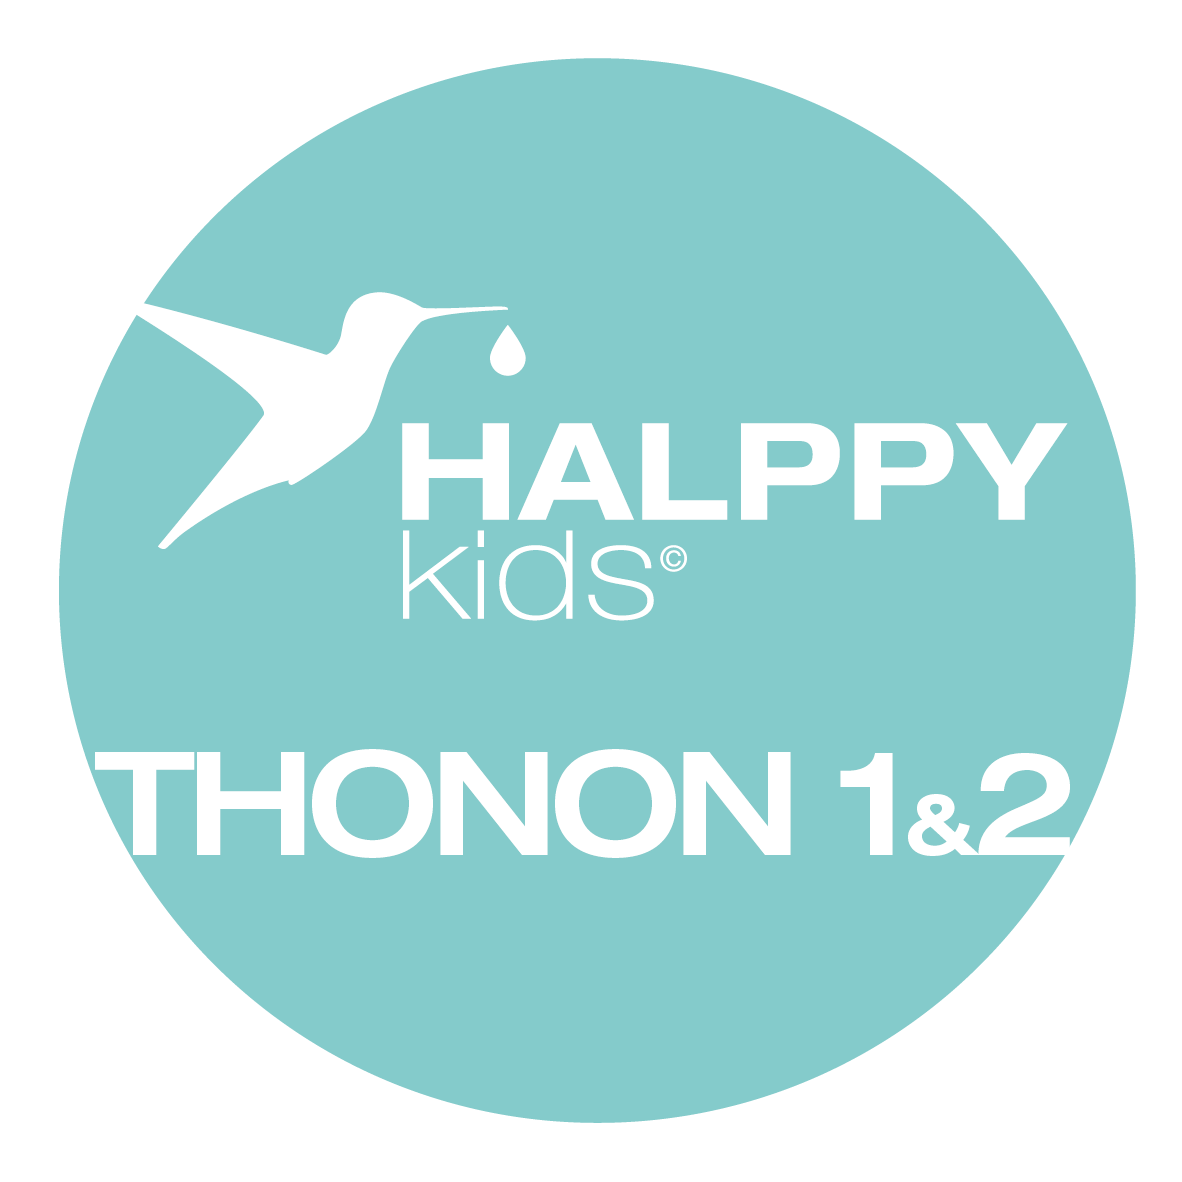 halppykids_thonon